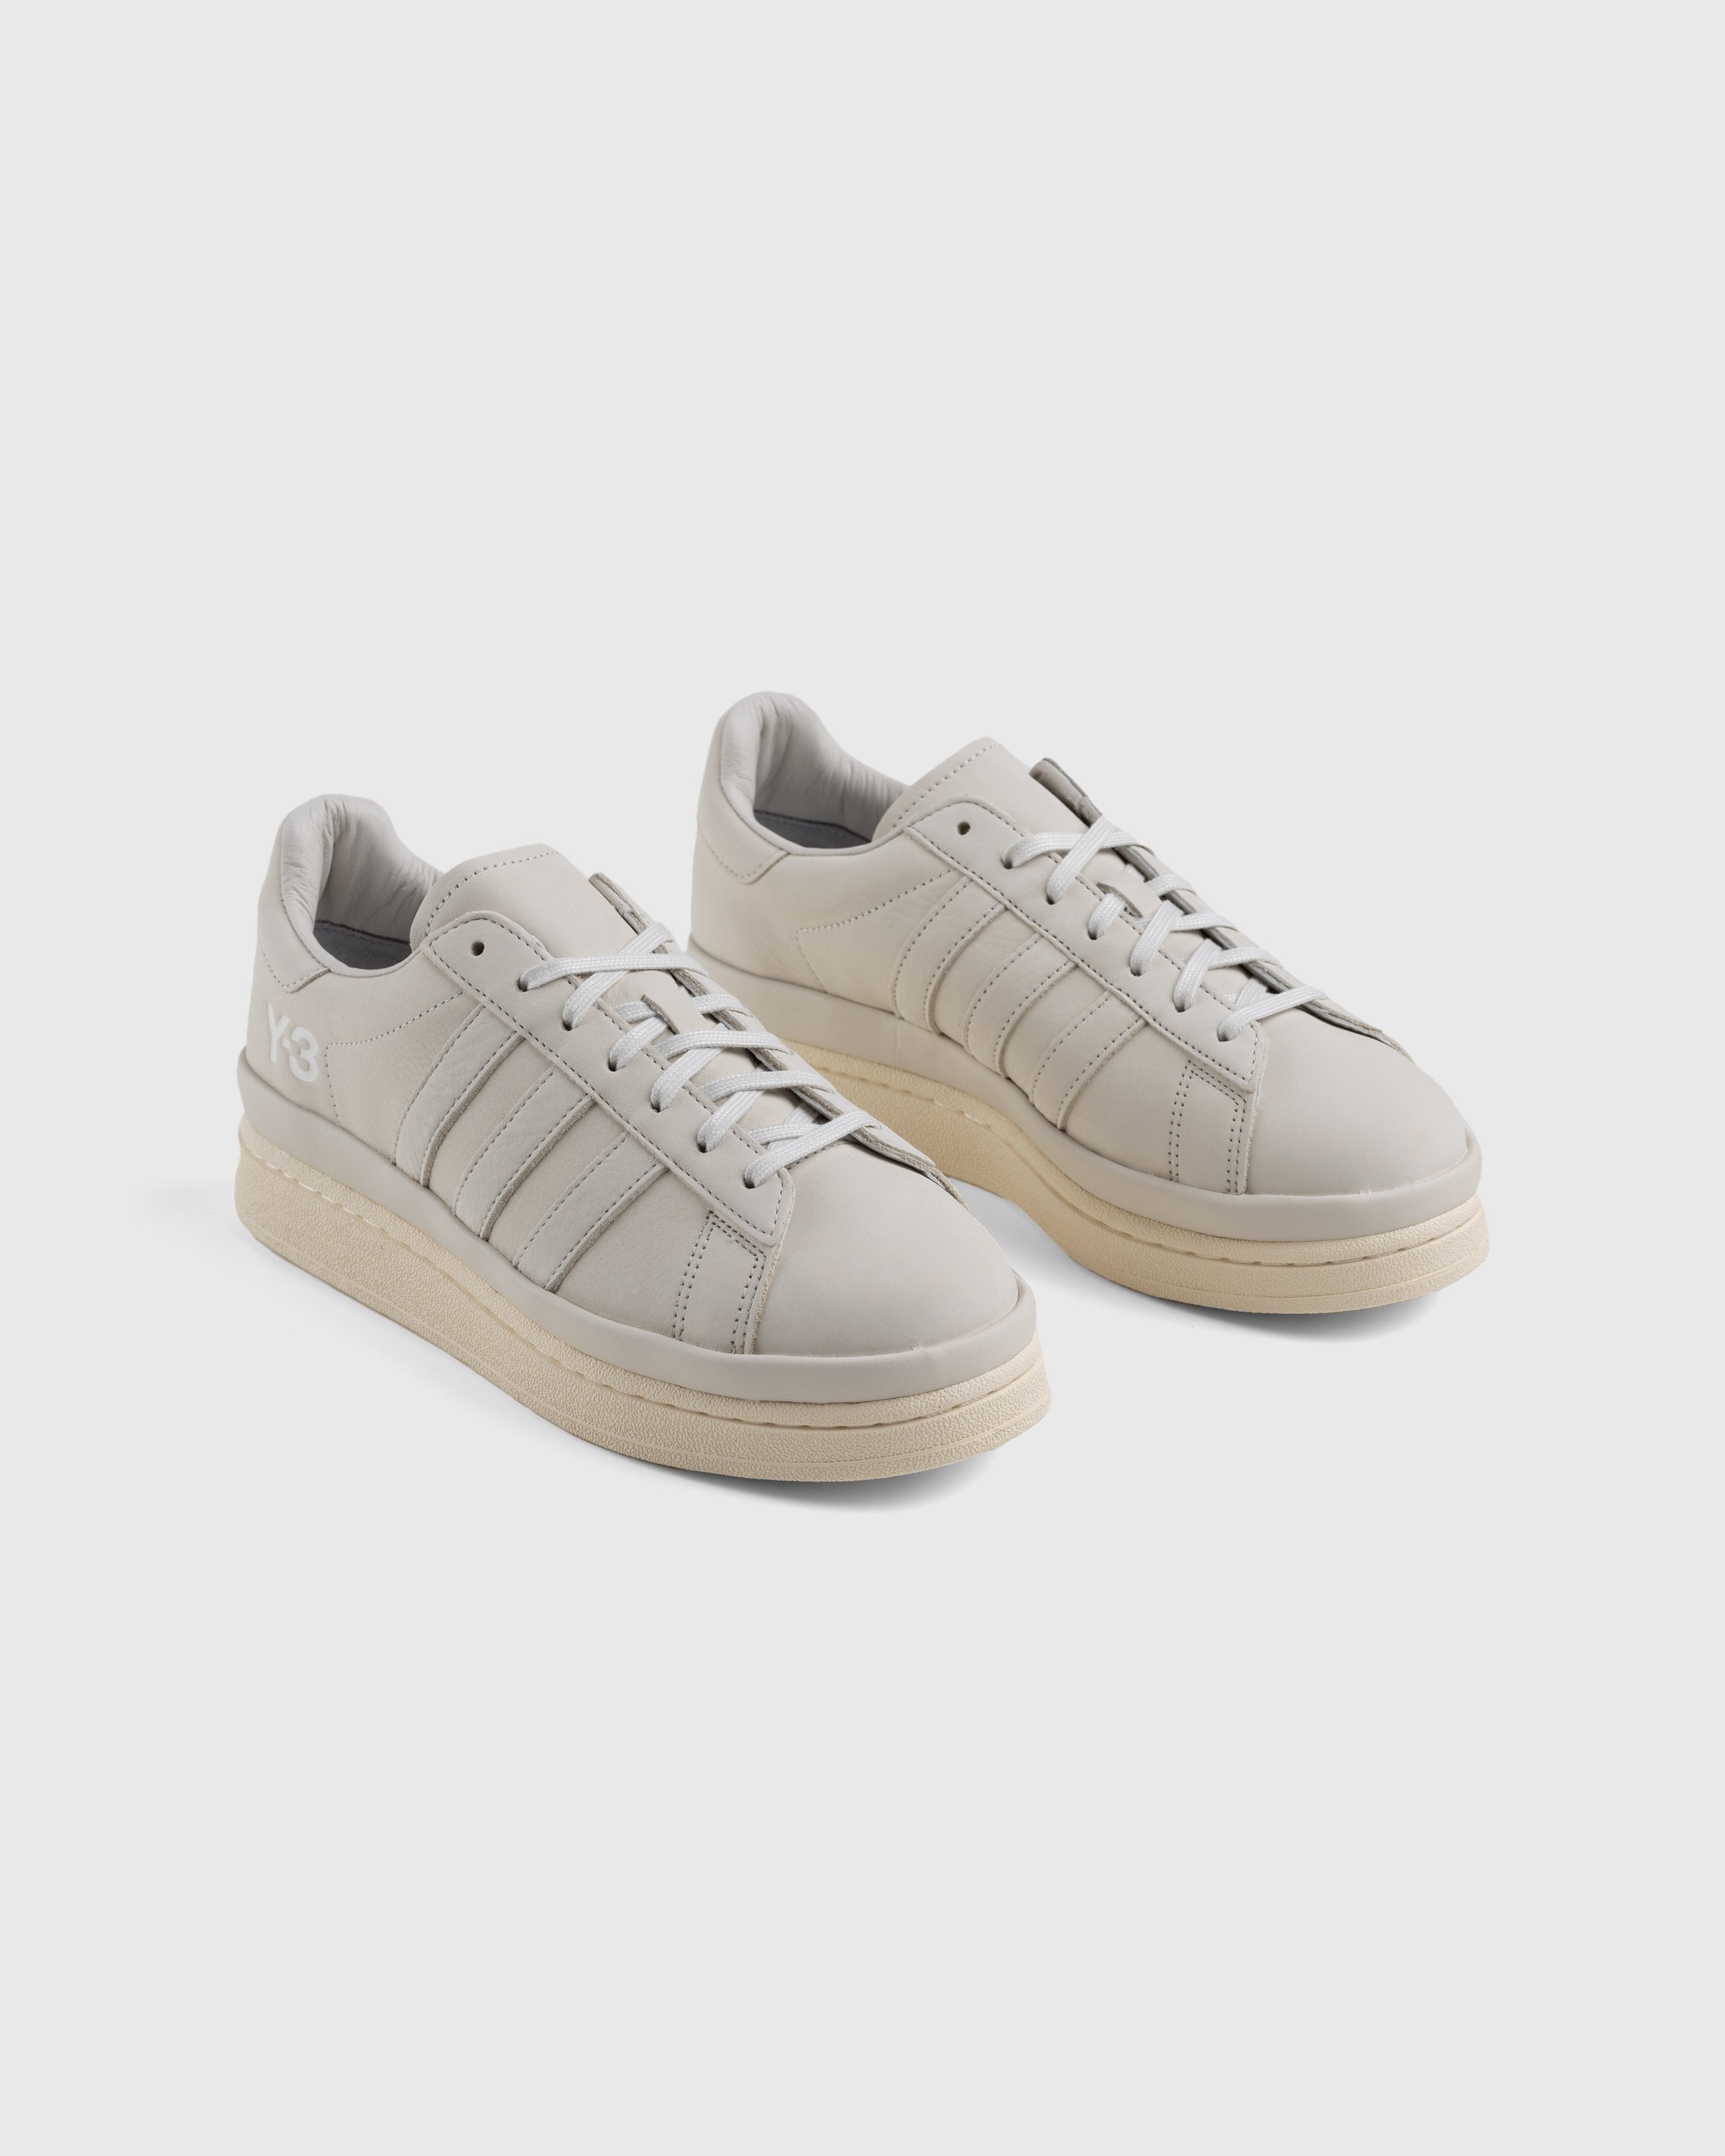 Y-3 – Hicho Grey/Cream - Sneakers - White - Image 4